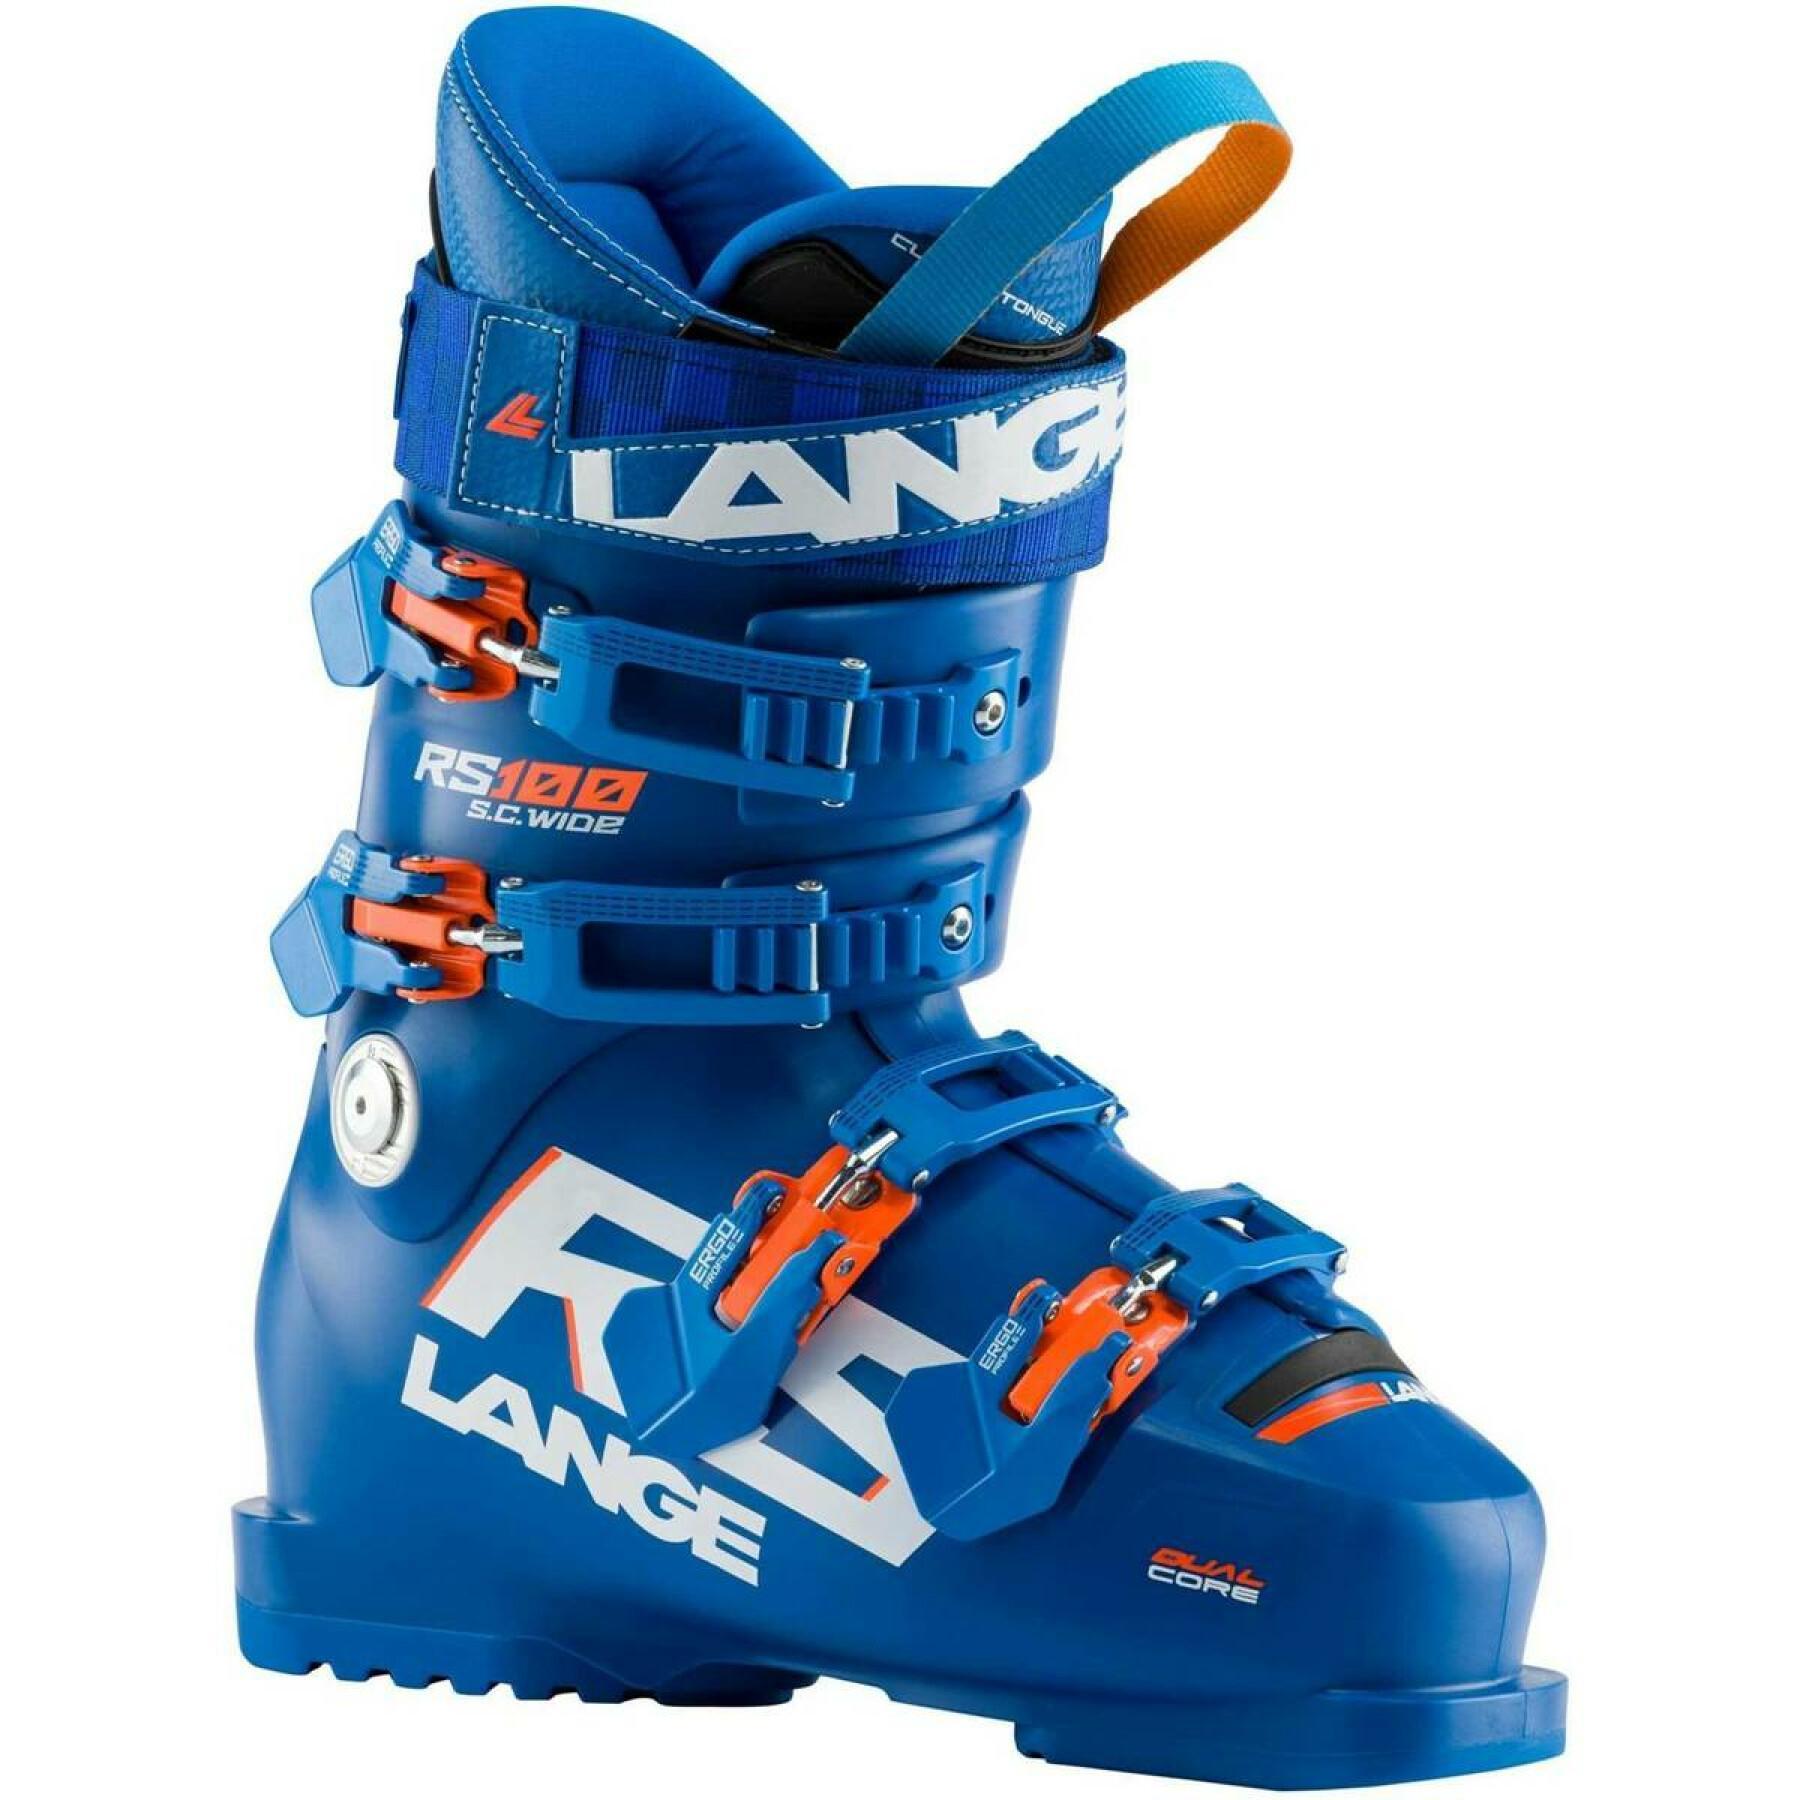 Children's ski boots Lange rs 100 s.c. wide